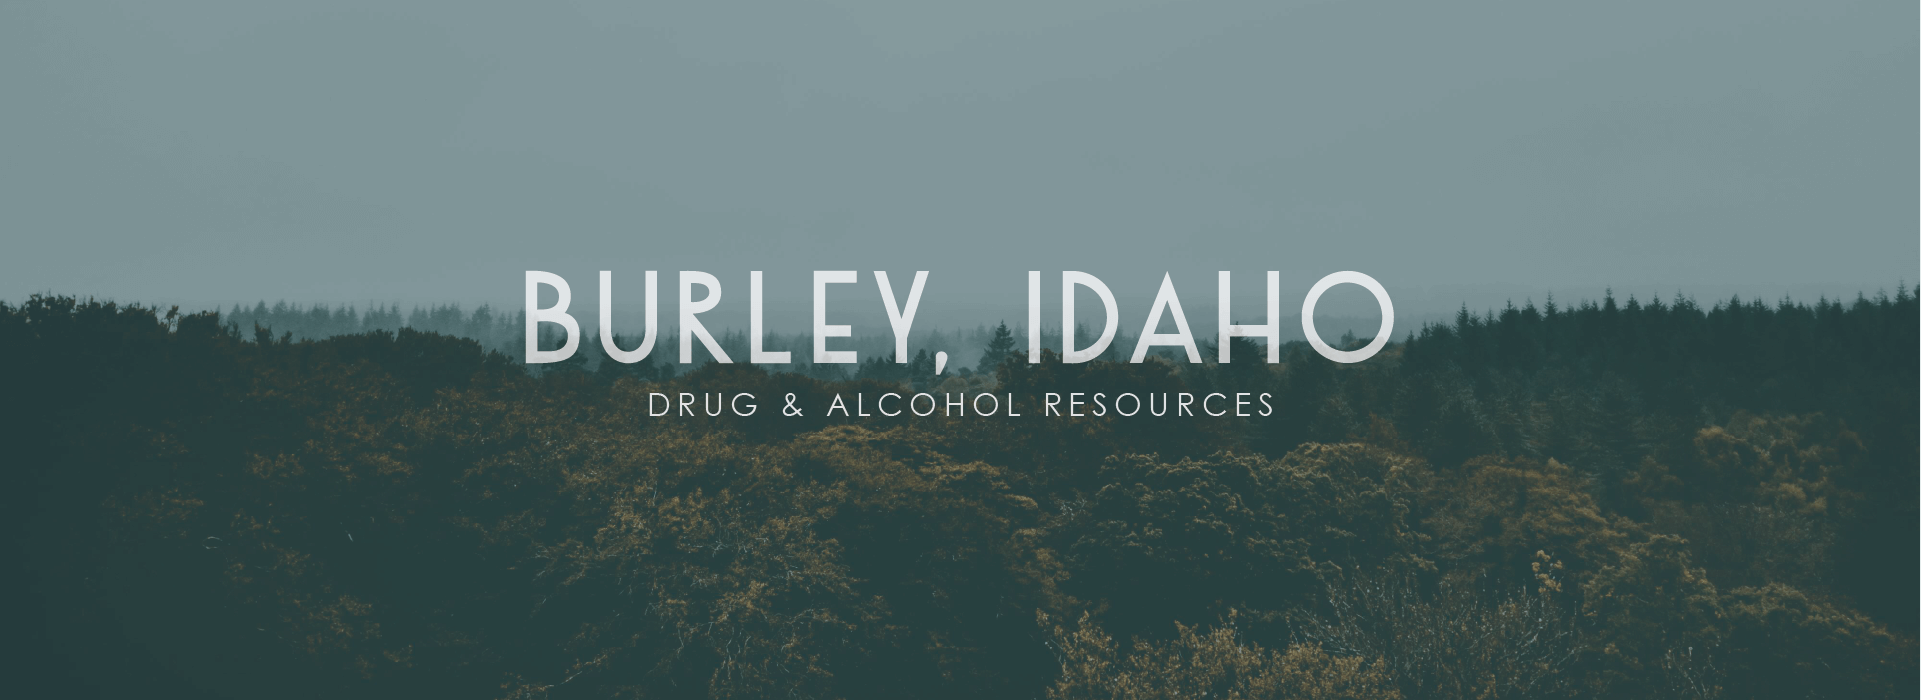 Burley, Idaho addiction resources